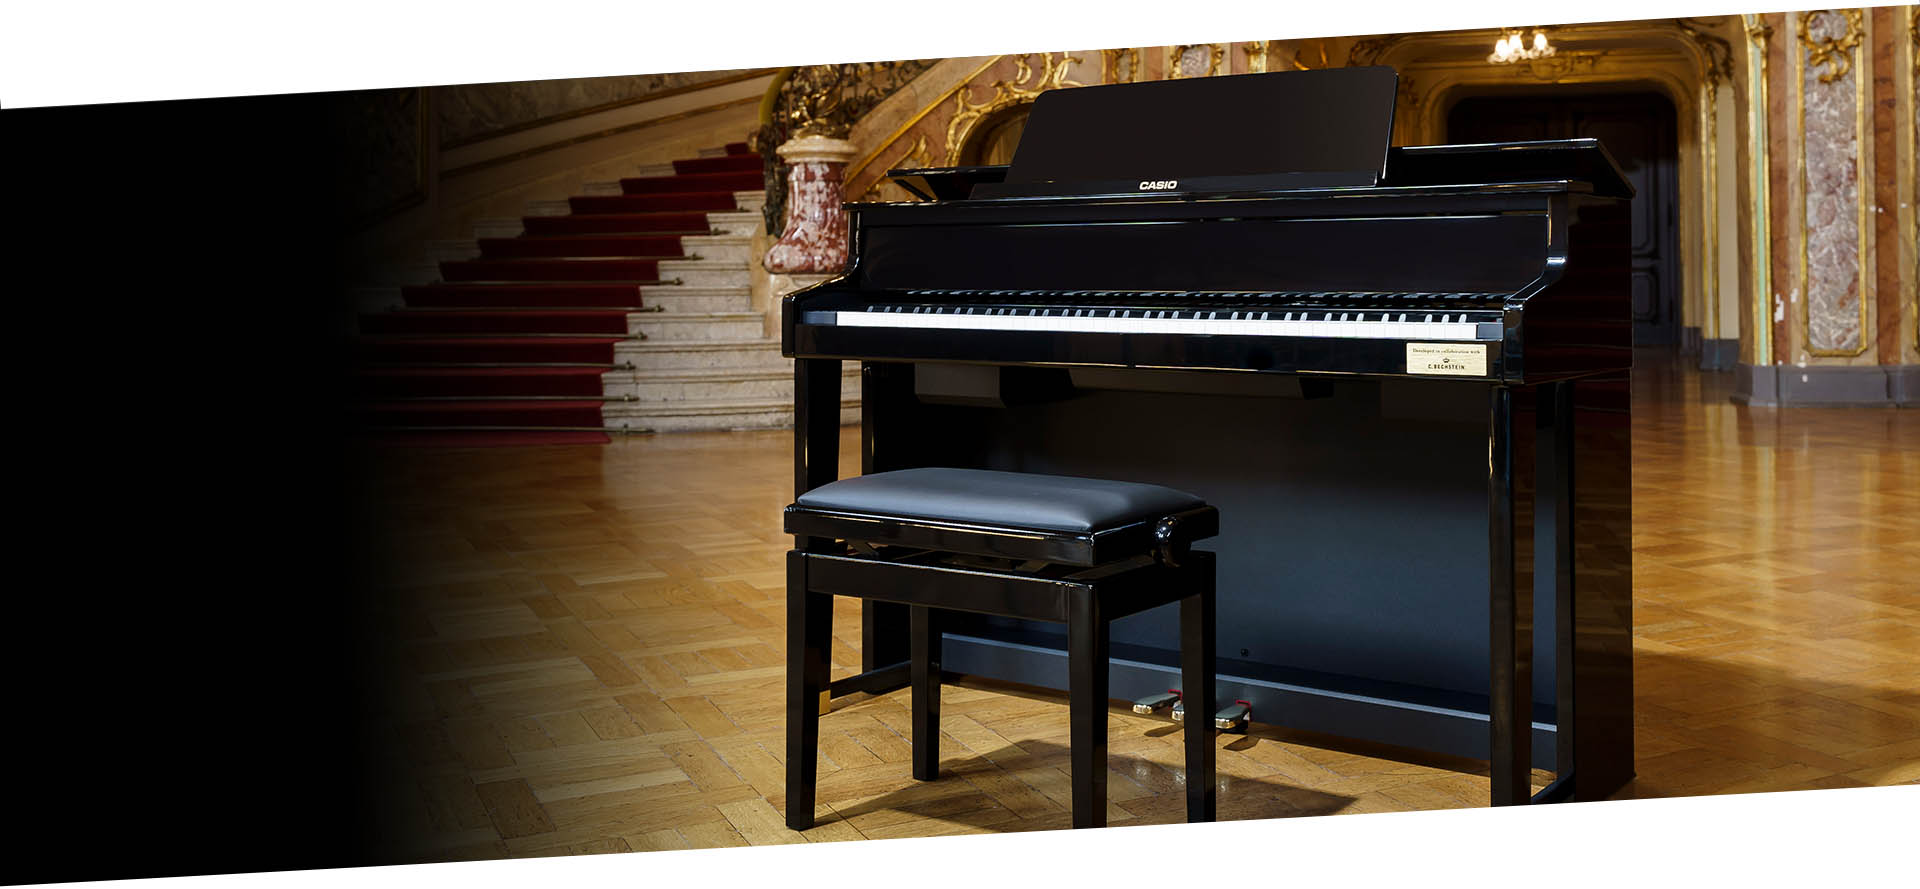 The GP-510 Grand Hybrid Piano